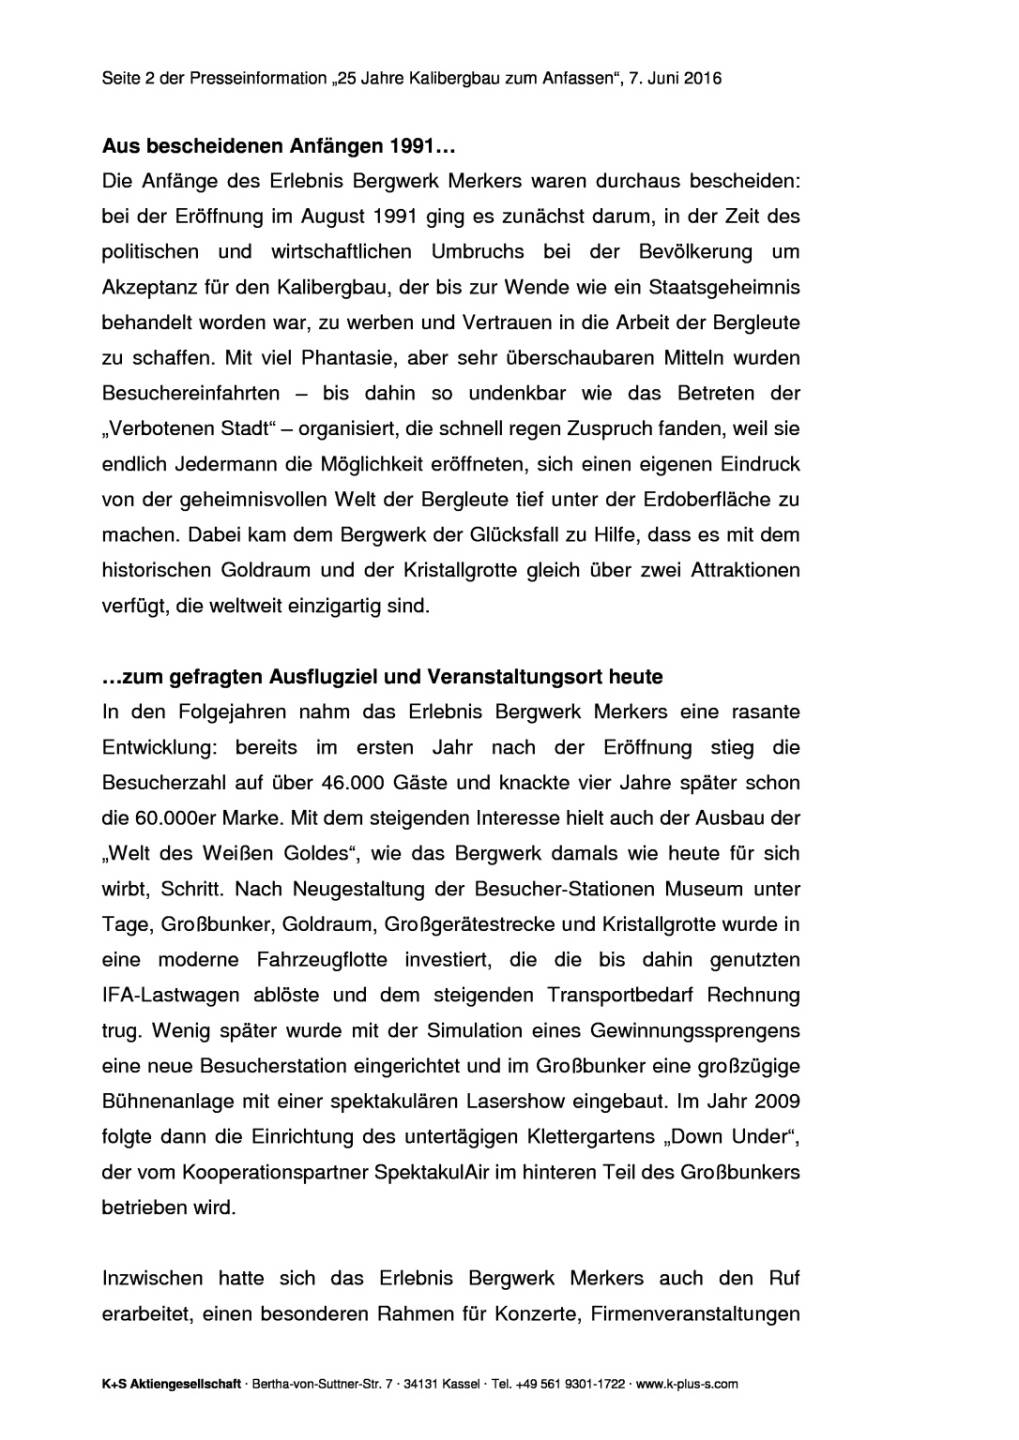 K+S AG: 25 Jahre Kalibergbau zum Anfassen, Seite 2/4, komplettes Dokument unter http://boerse-social.com/static/uploads/file_1179_ks_ag_25_jahre_kalibergbau_zum_anfassen.pdf